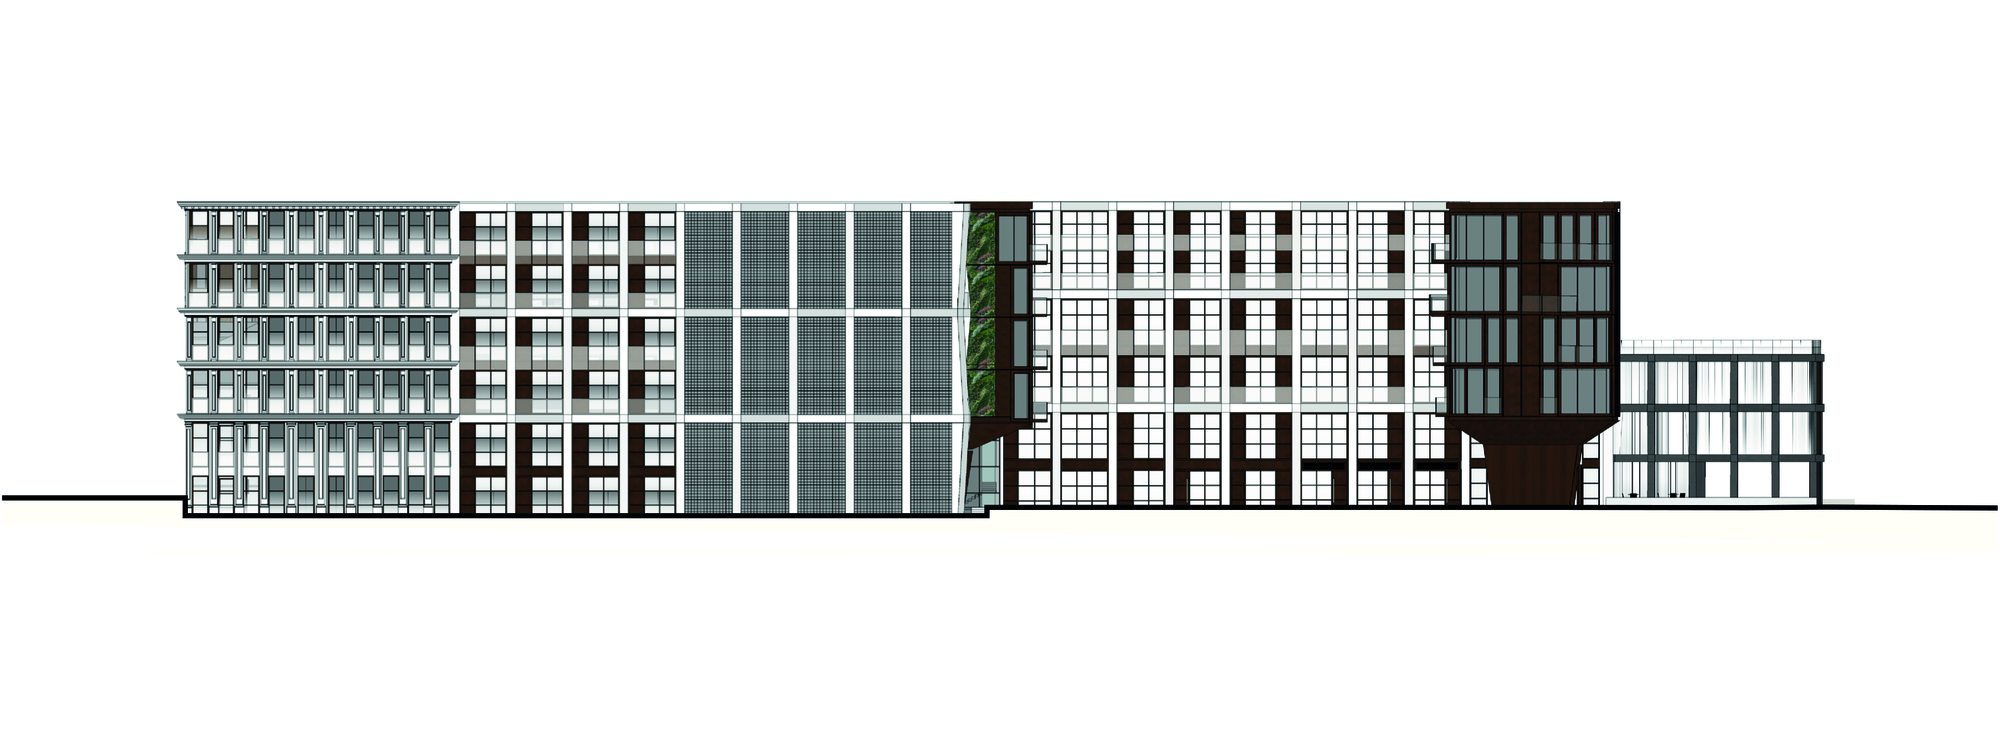 Ordynka Building-32